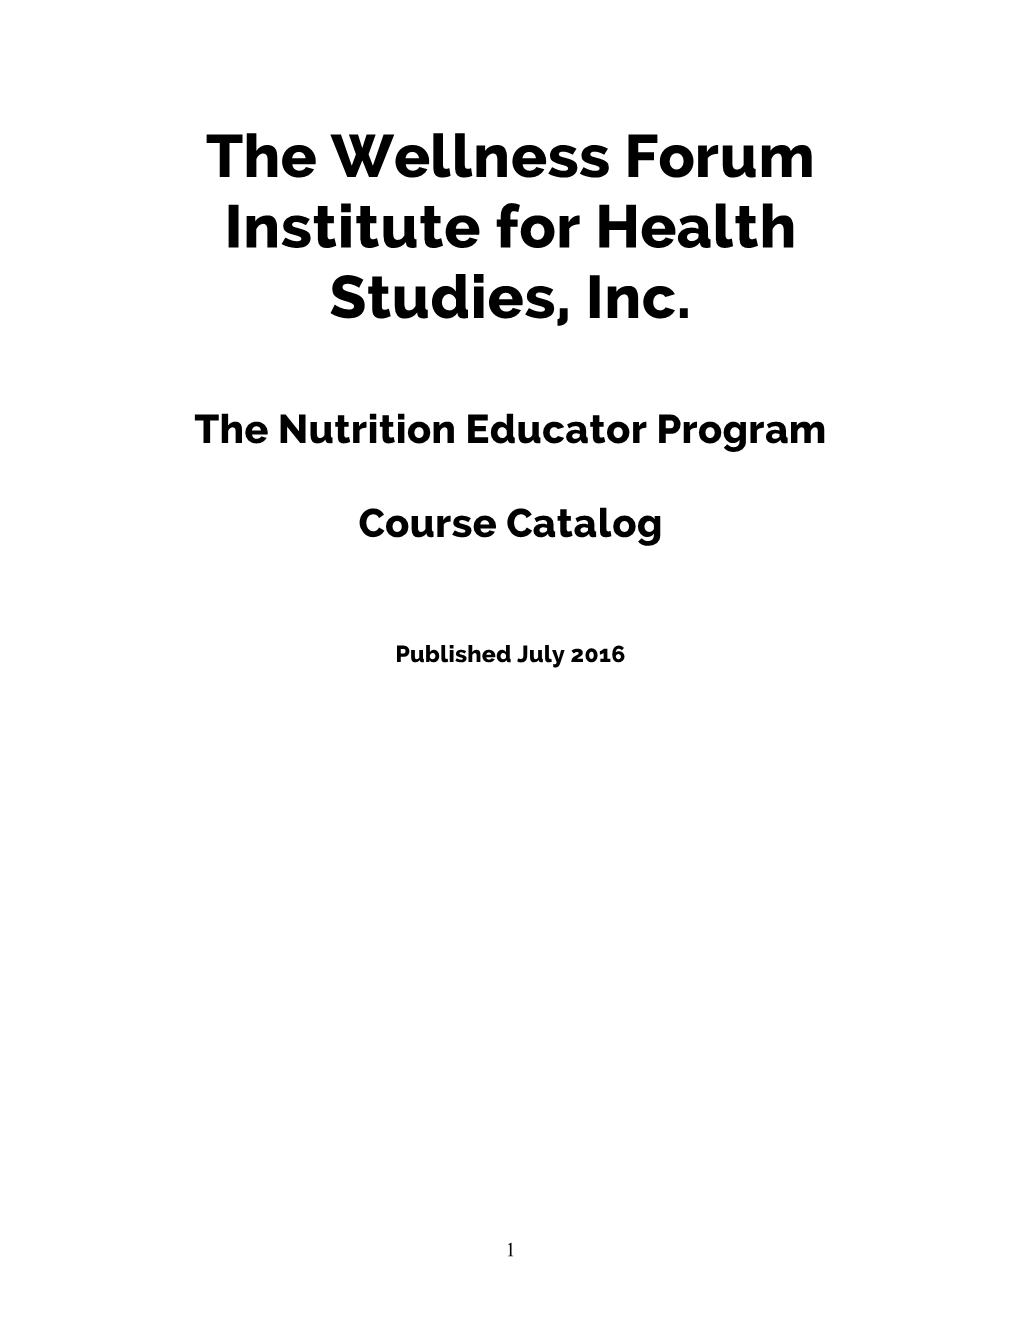 The Wellness Forum Institute for Health Studies, Inc